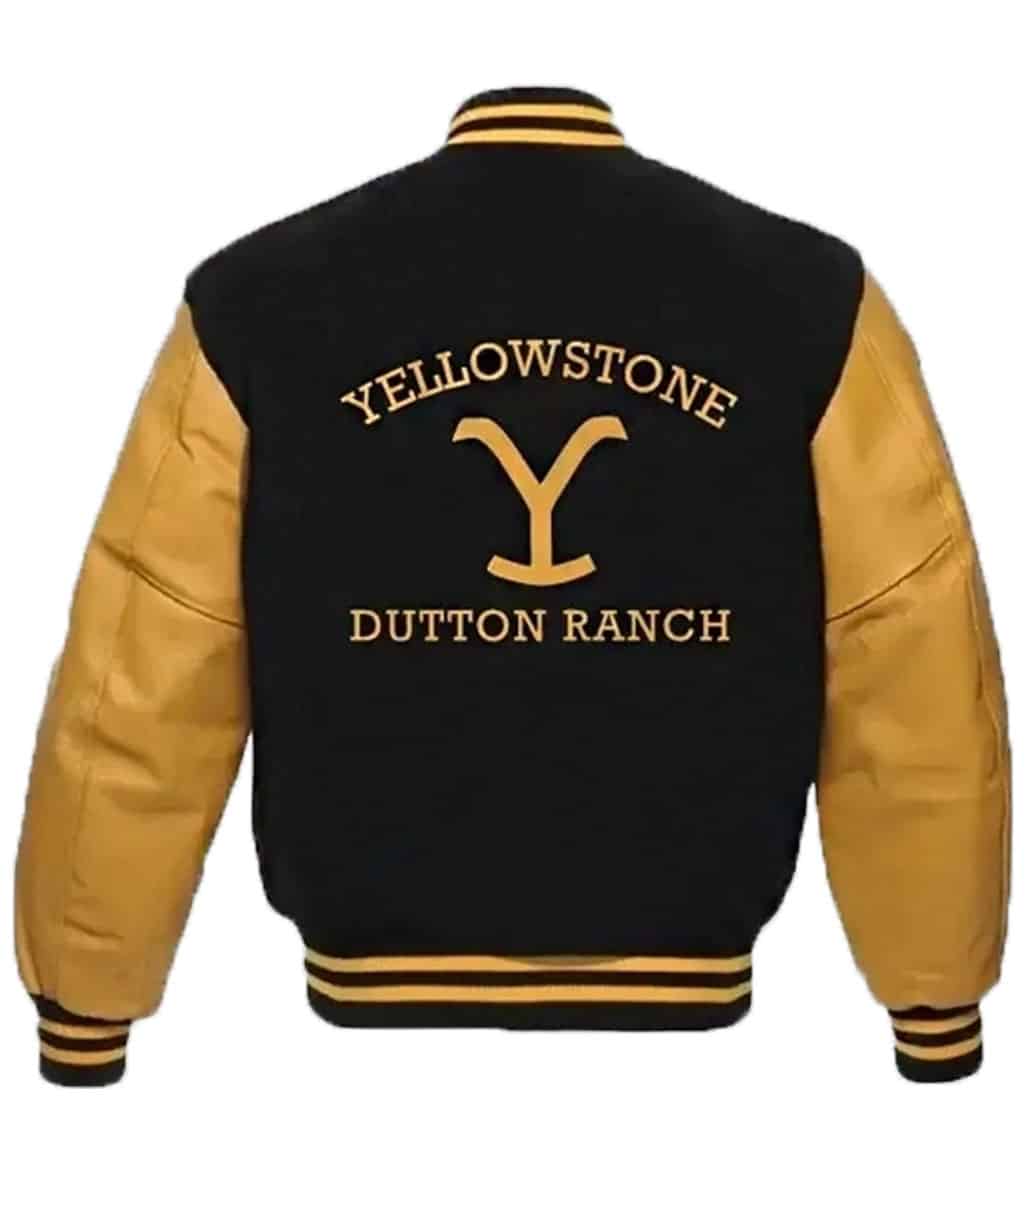 Yellowstone Dutton Ranch Varsity Jackets